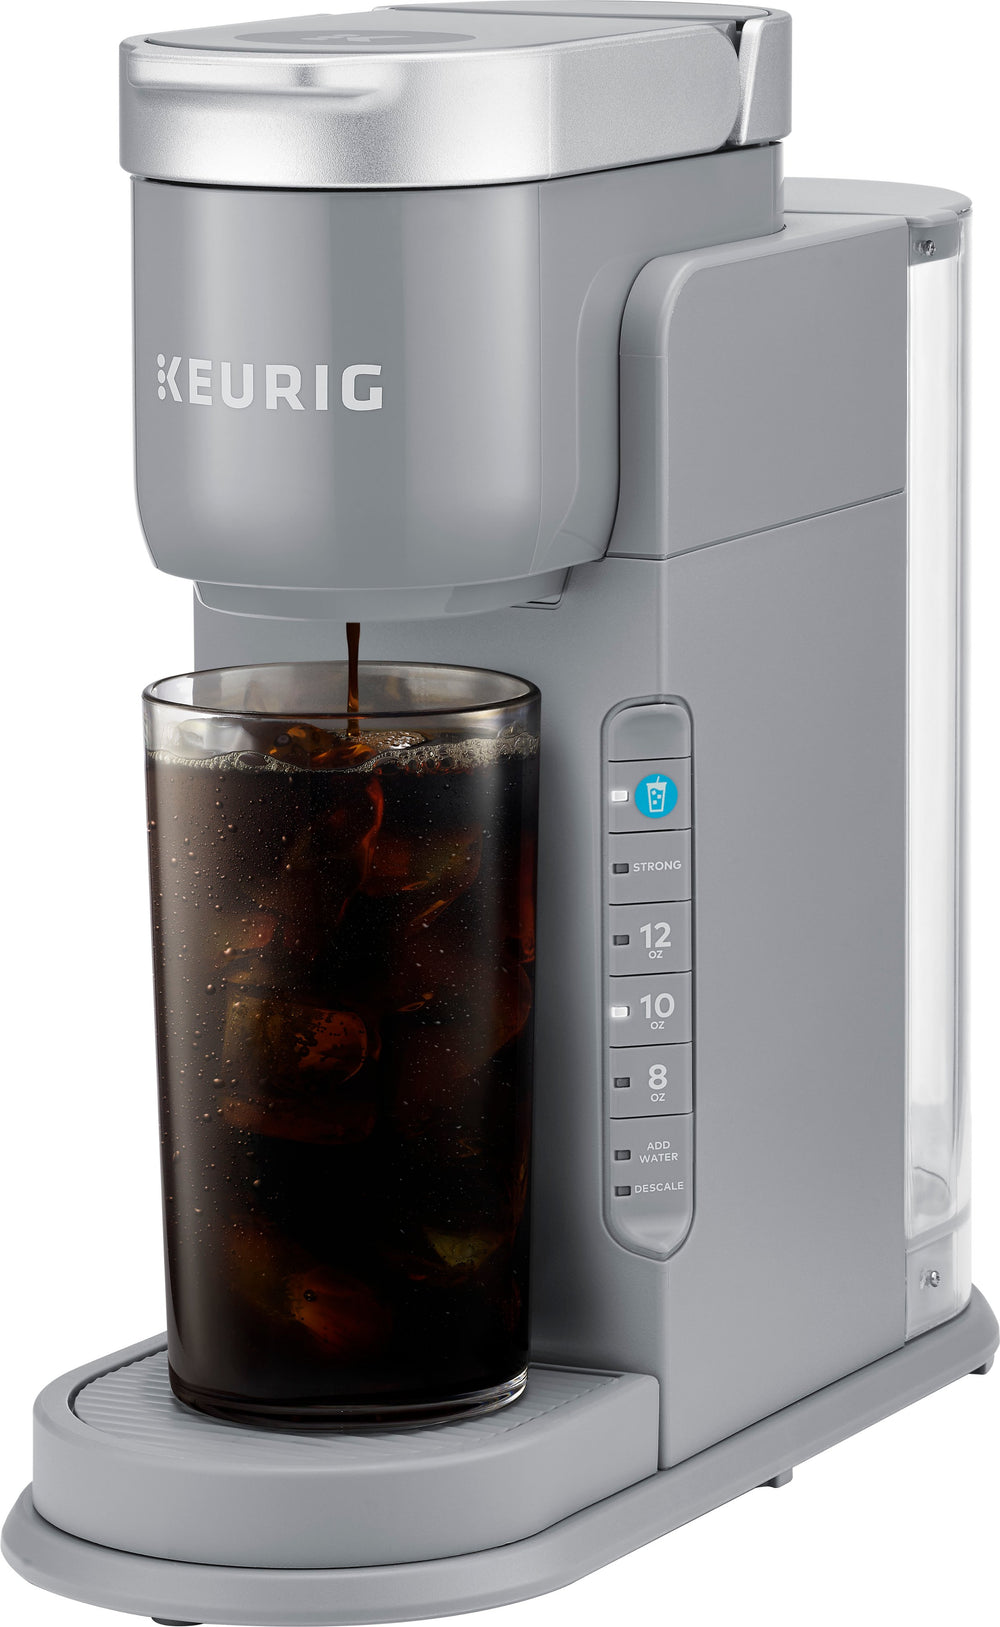 Keurig - K-Iced Single Serve K-Cup Pod Coffee Maker - Gray_1